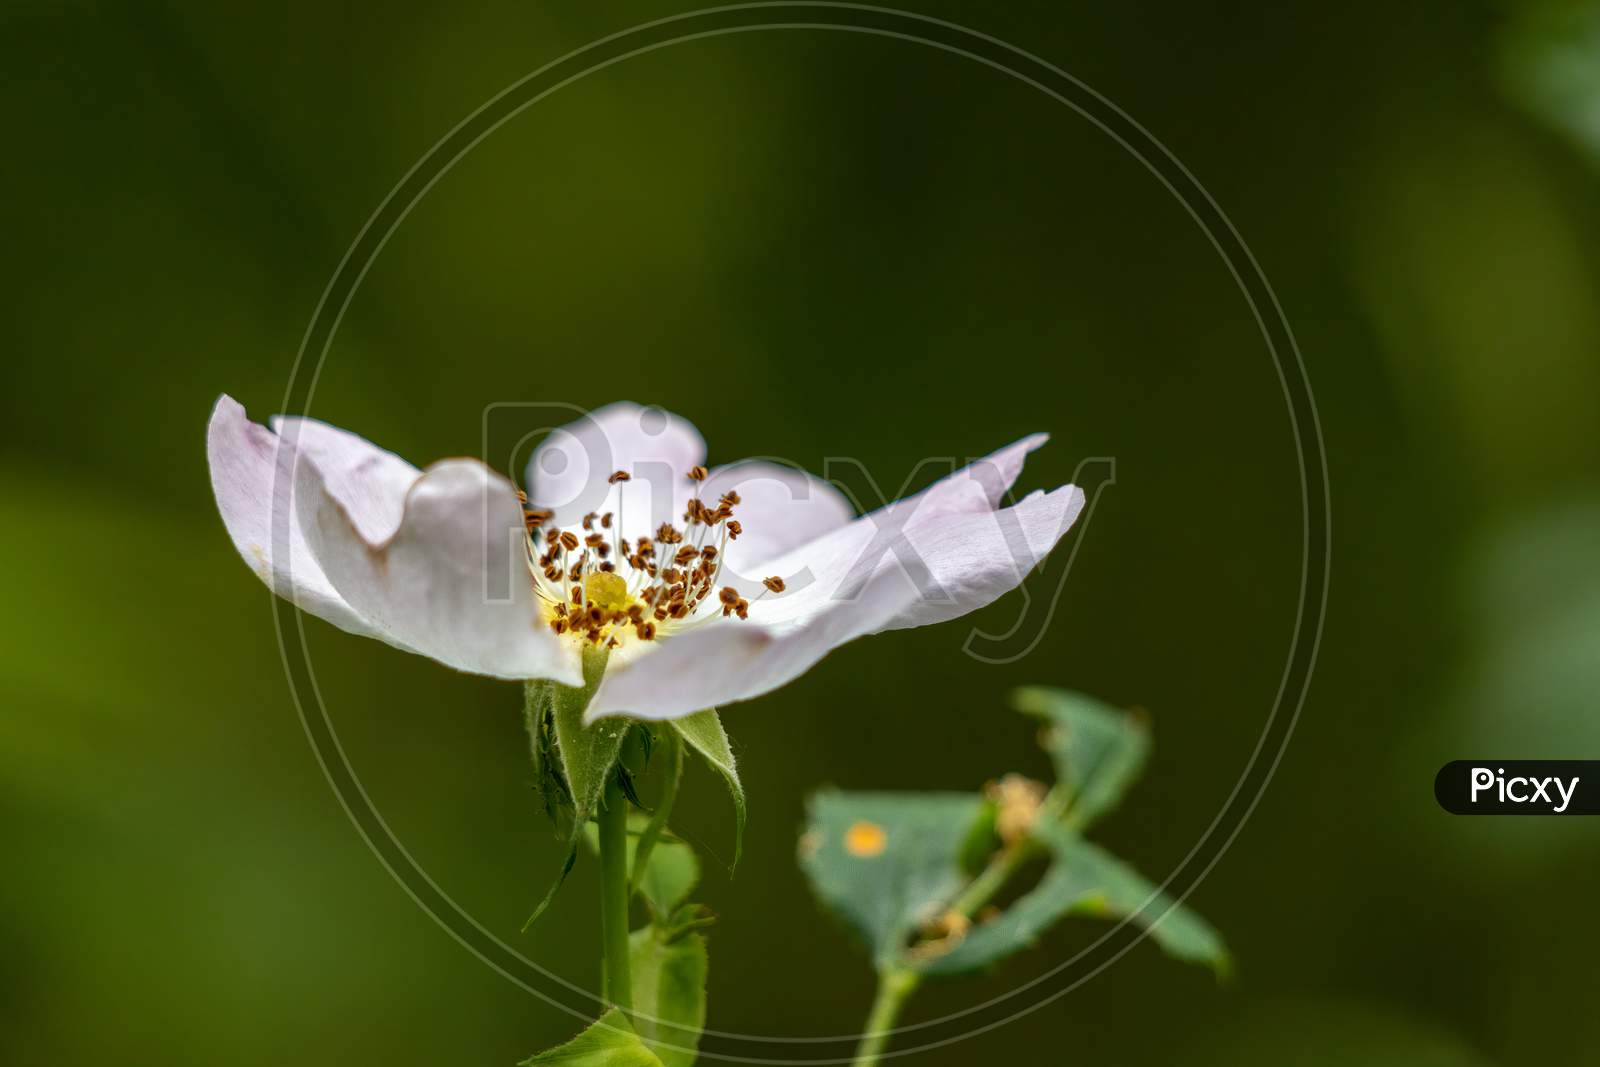 Wild White Dog Rose (Rosa Canina) Flowering In Summer